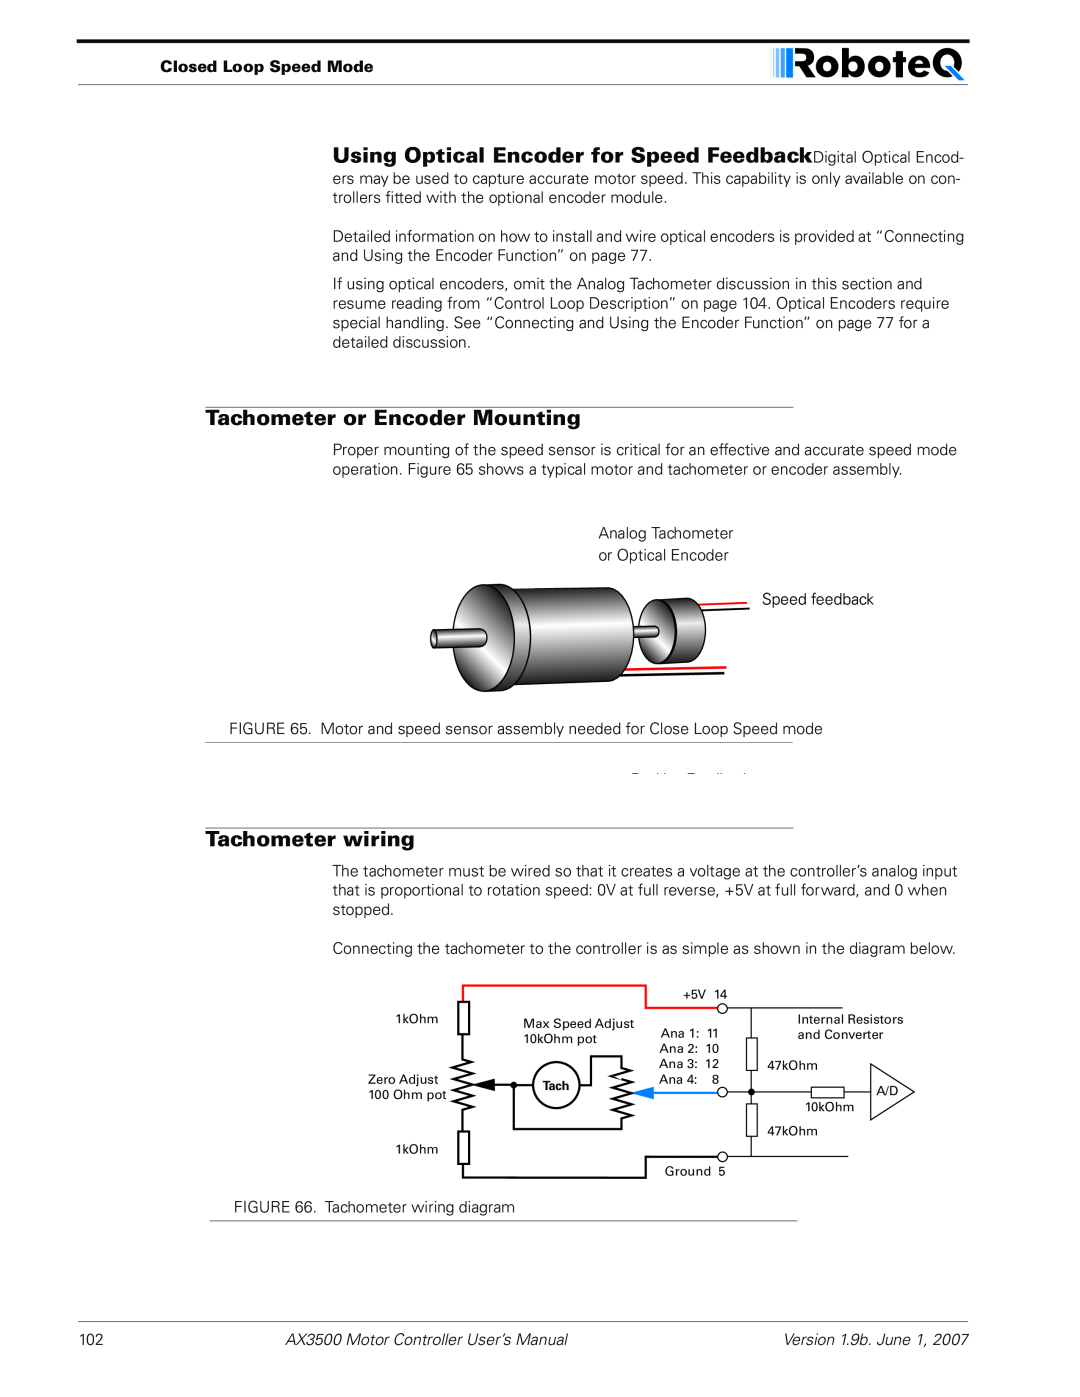 RoboteQ AX3500 user manual Using Optical Encoder for Speed FeedbackDigital Optical Encod, Tachometer or Encoder Mounting 